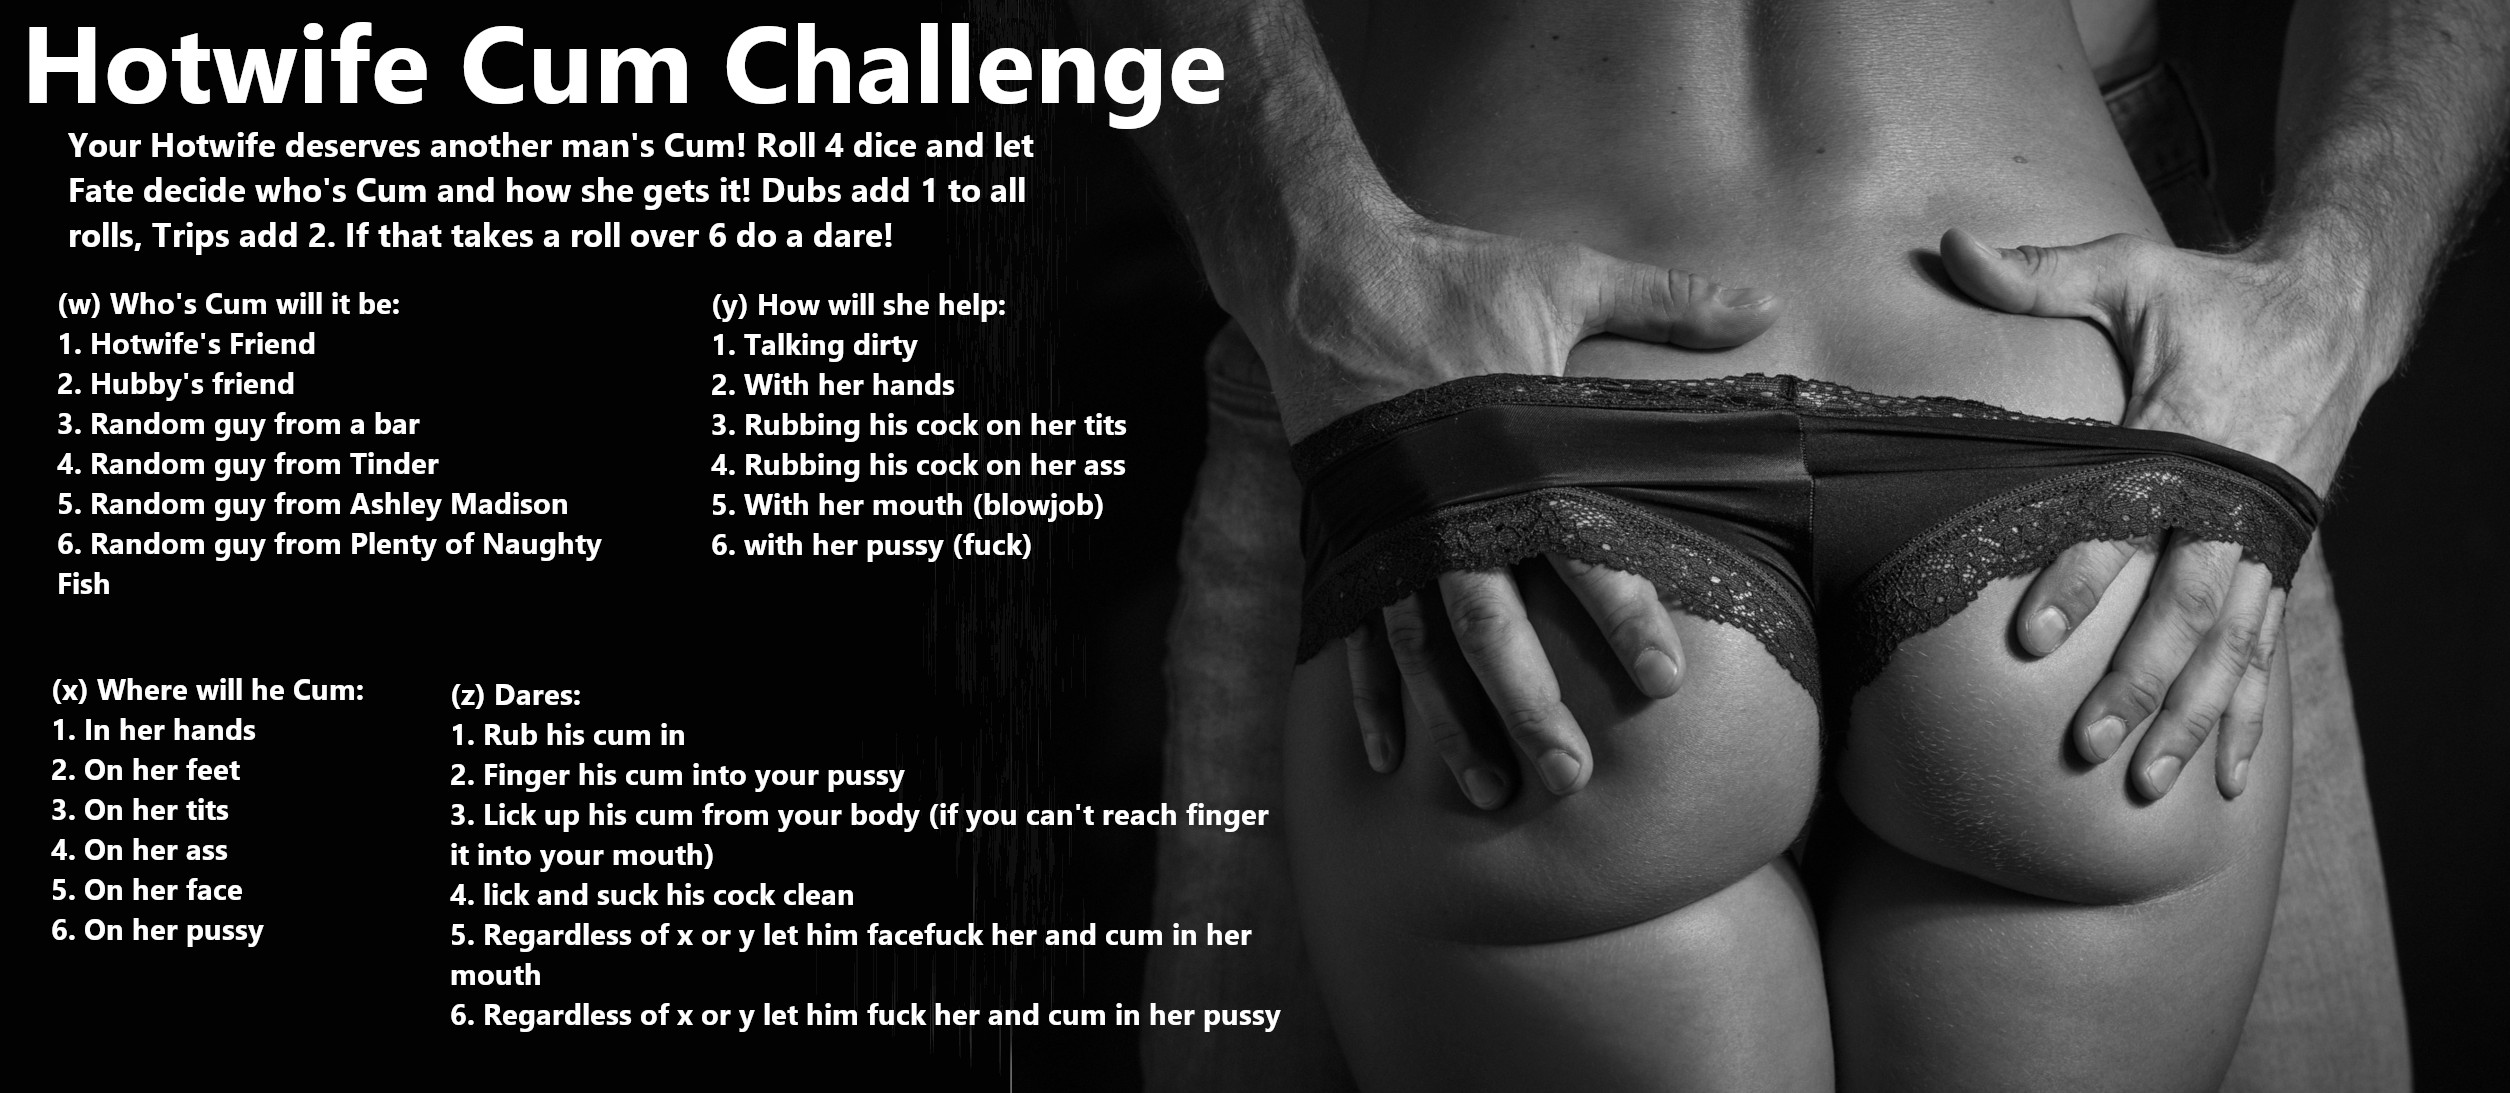 Hotwife Cum Challenge image photo